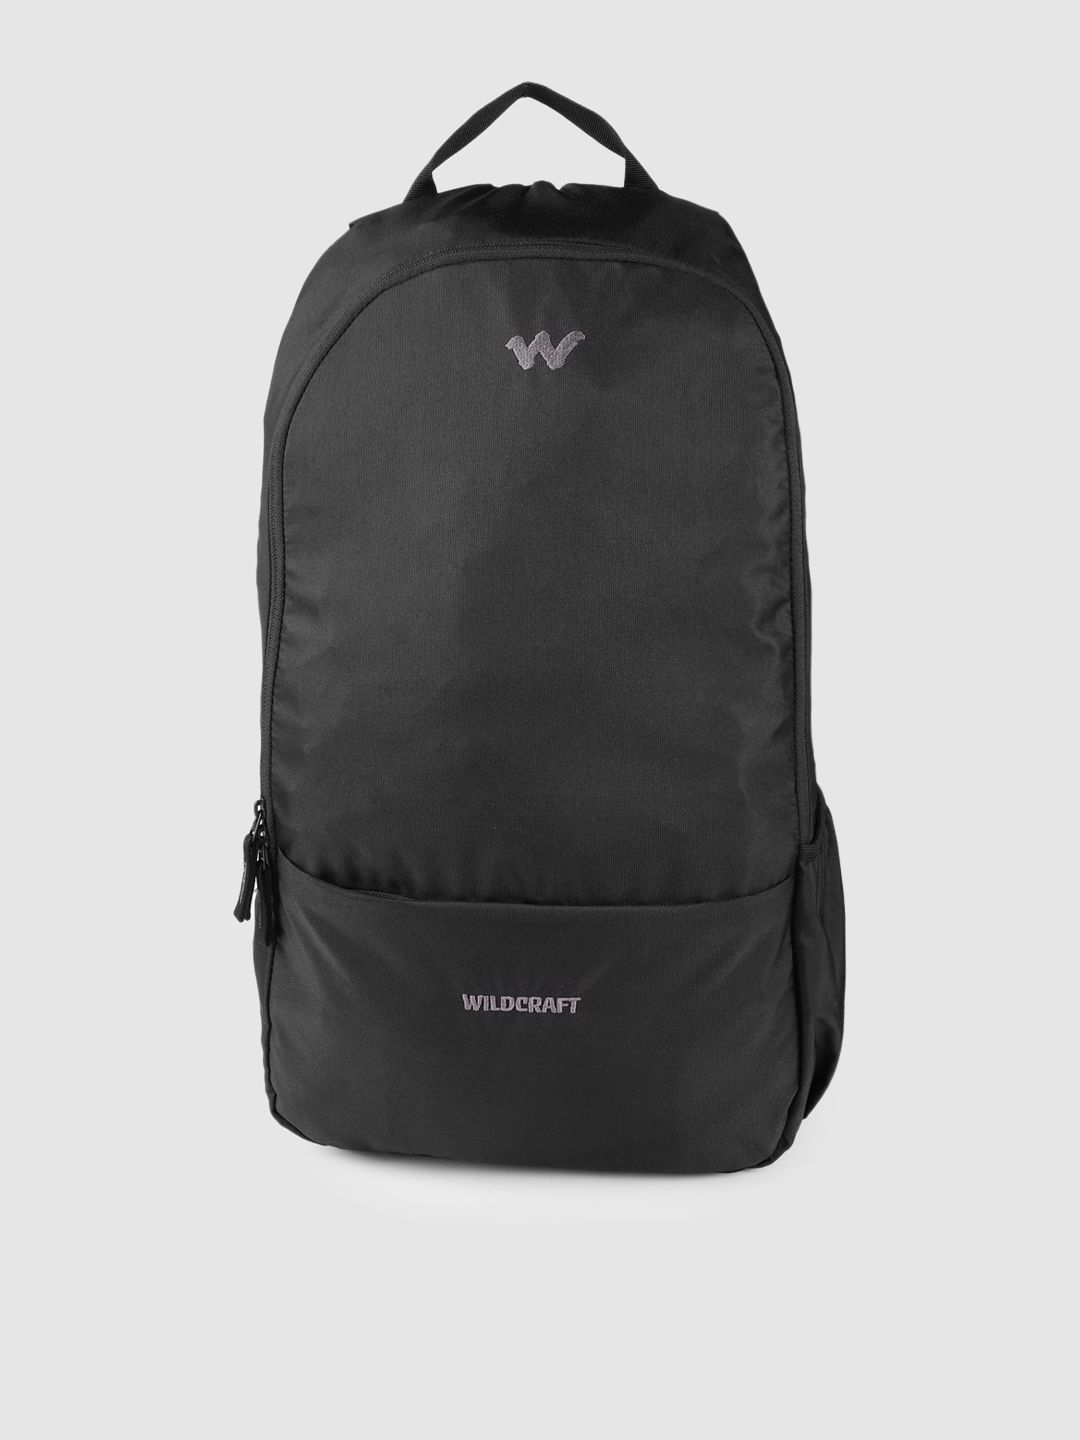 Wildcraft Unisex Black Binder 2 Backpack Price in India